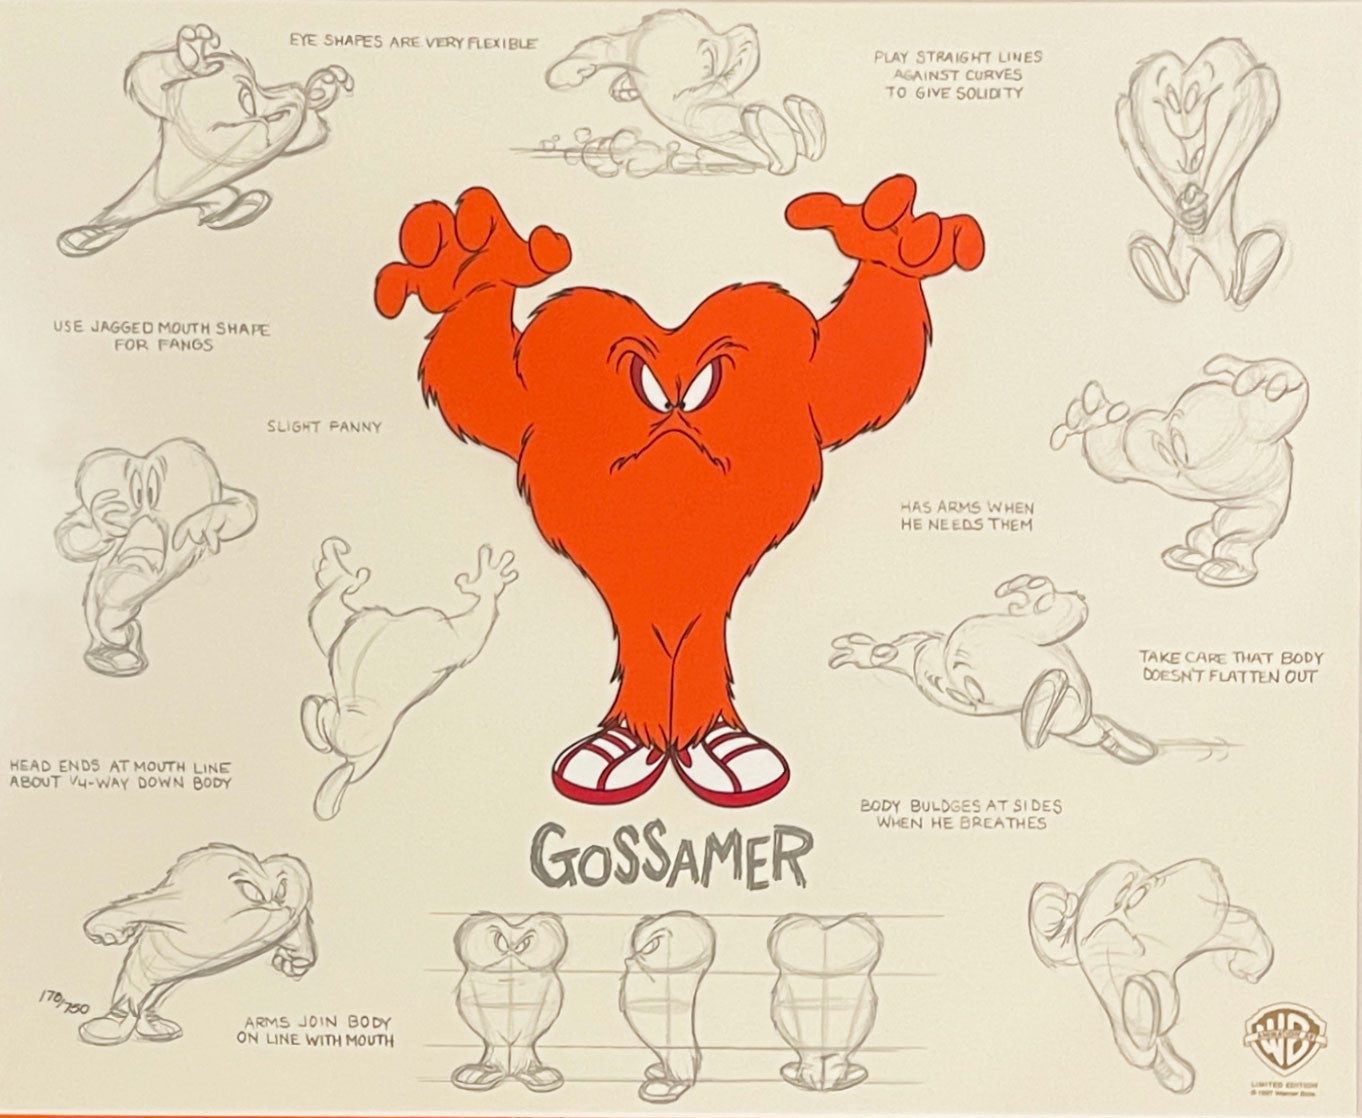 Original Warner Brothers Limited Edition Model Cel Featuring Gossamer